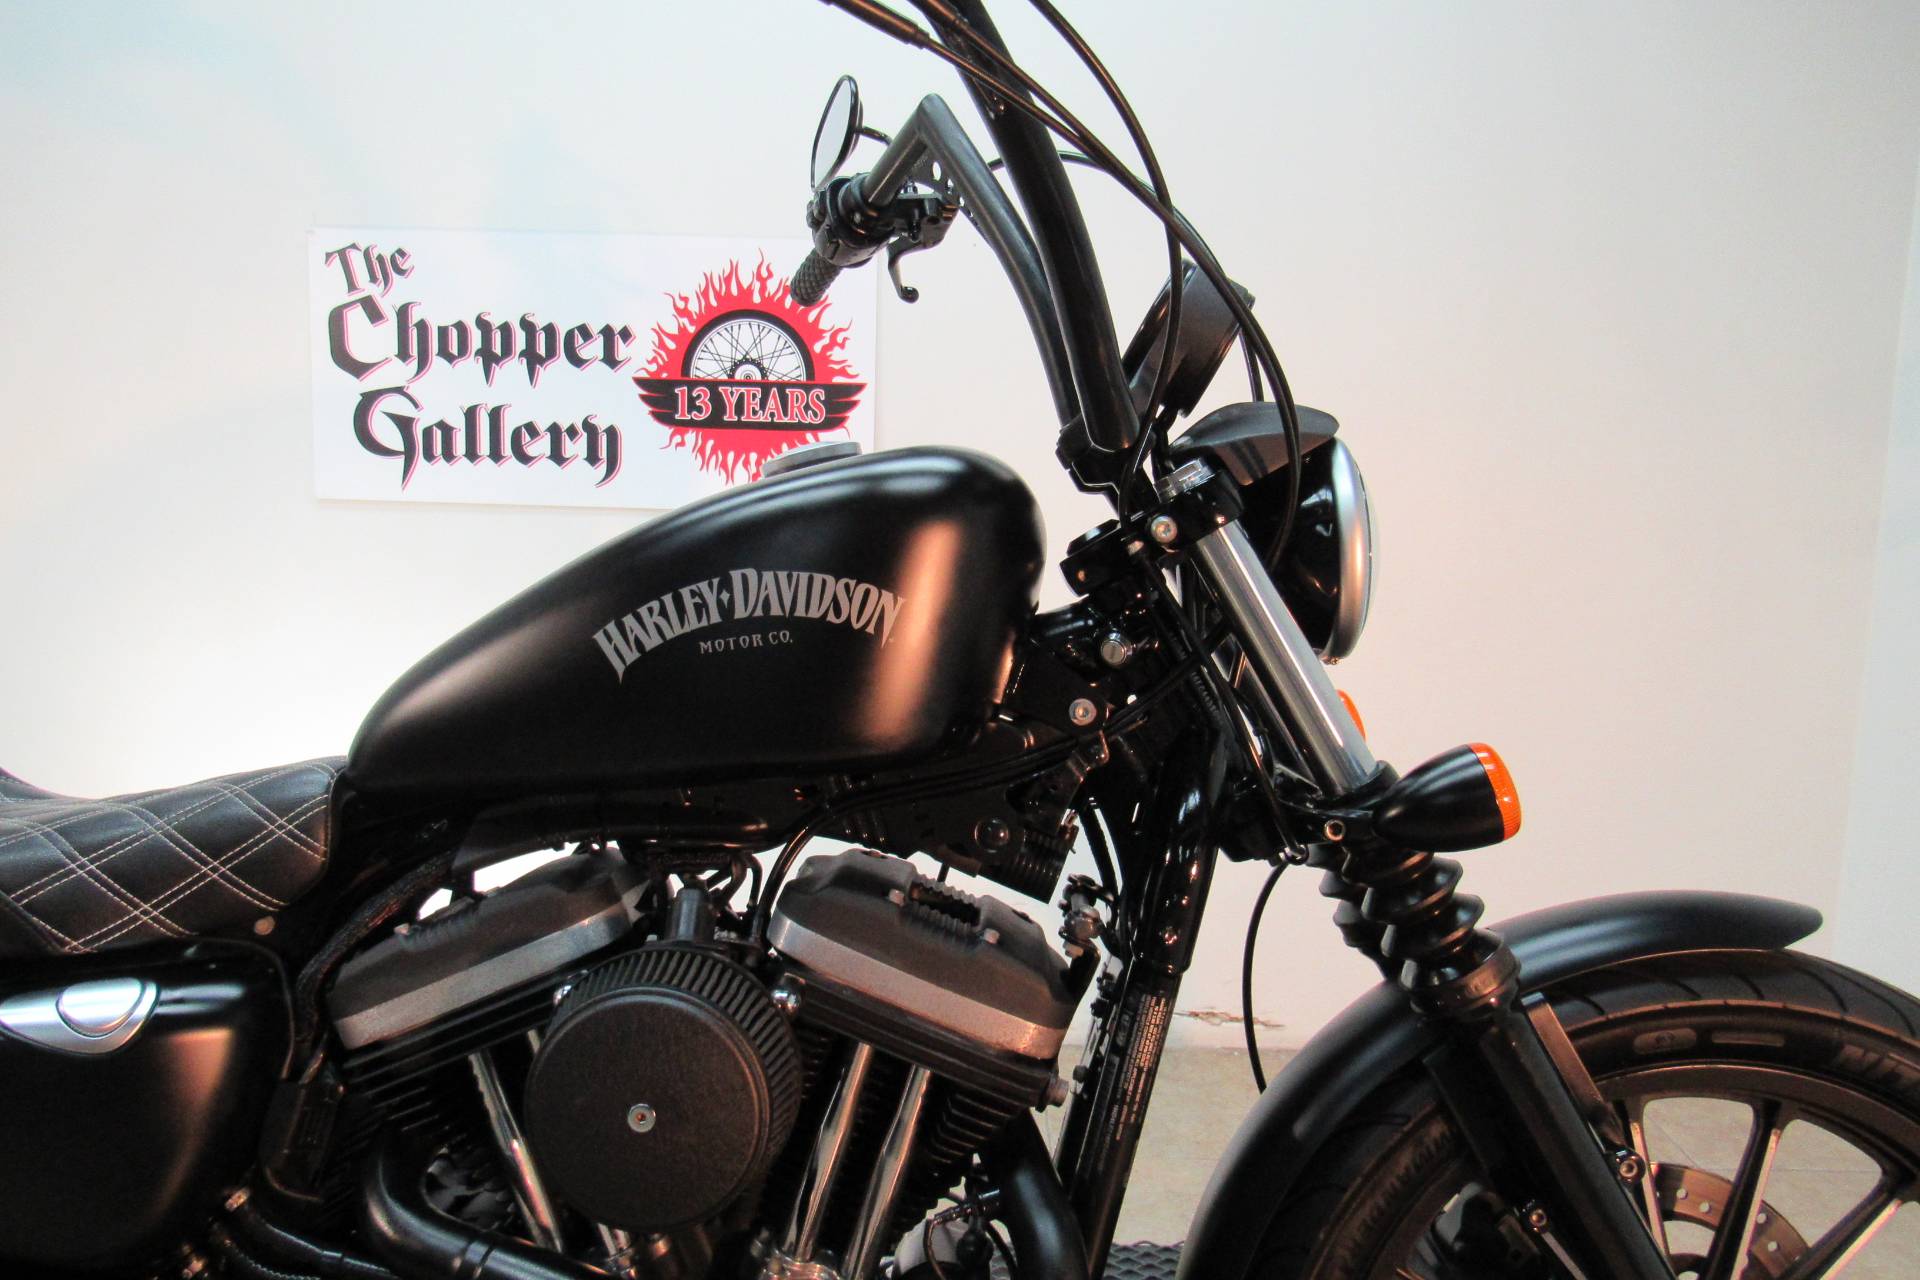 2015 Harley-Davidson Iron 883™ in Temecula, California - Photo 9